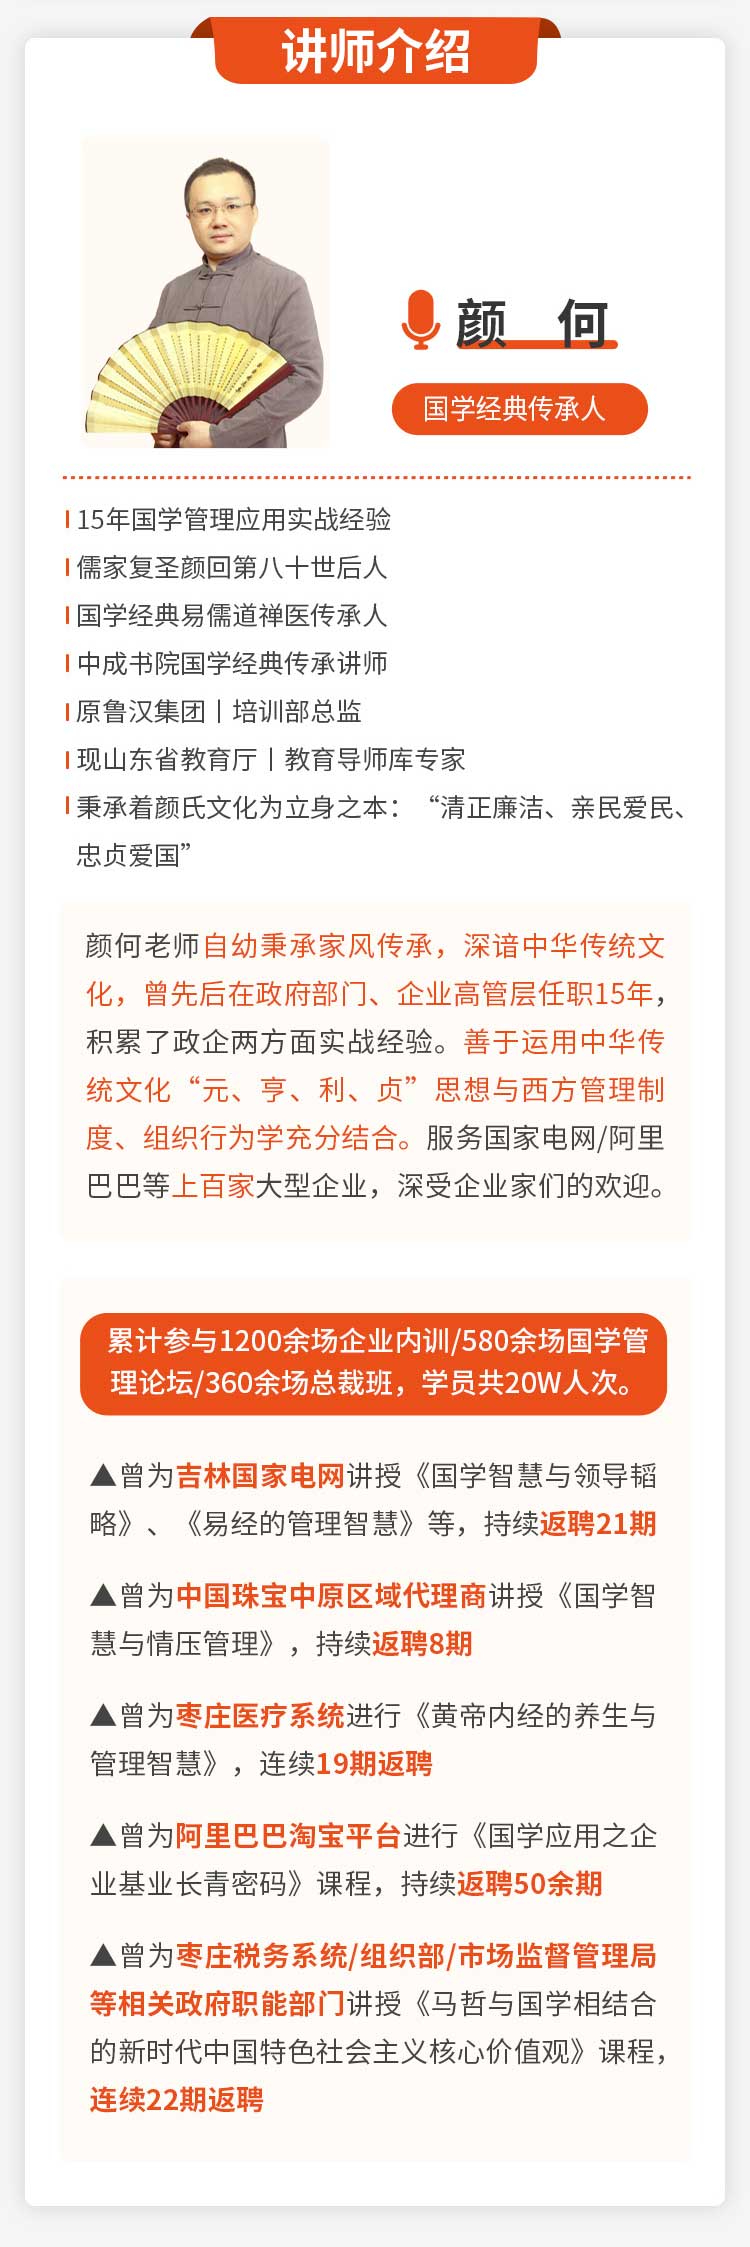 https://ksb-1253359580.cos.ap-guangzhou.myqcloud.com/newhdp%2Flive_cover%2F5989%2Fdb6dea733f8063ac115c112c53029f62.jpeg